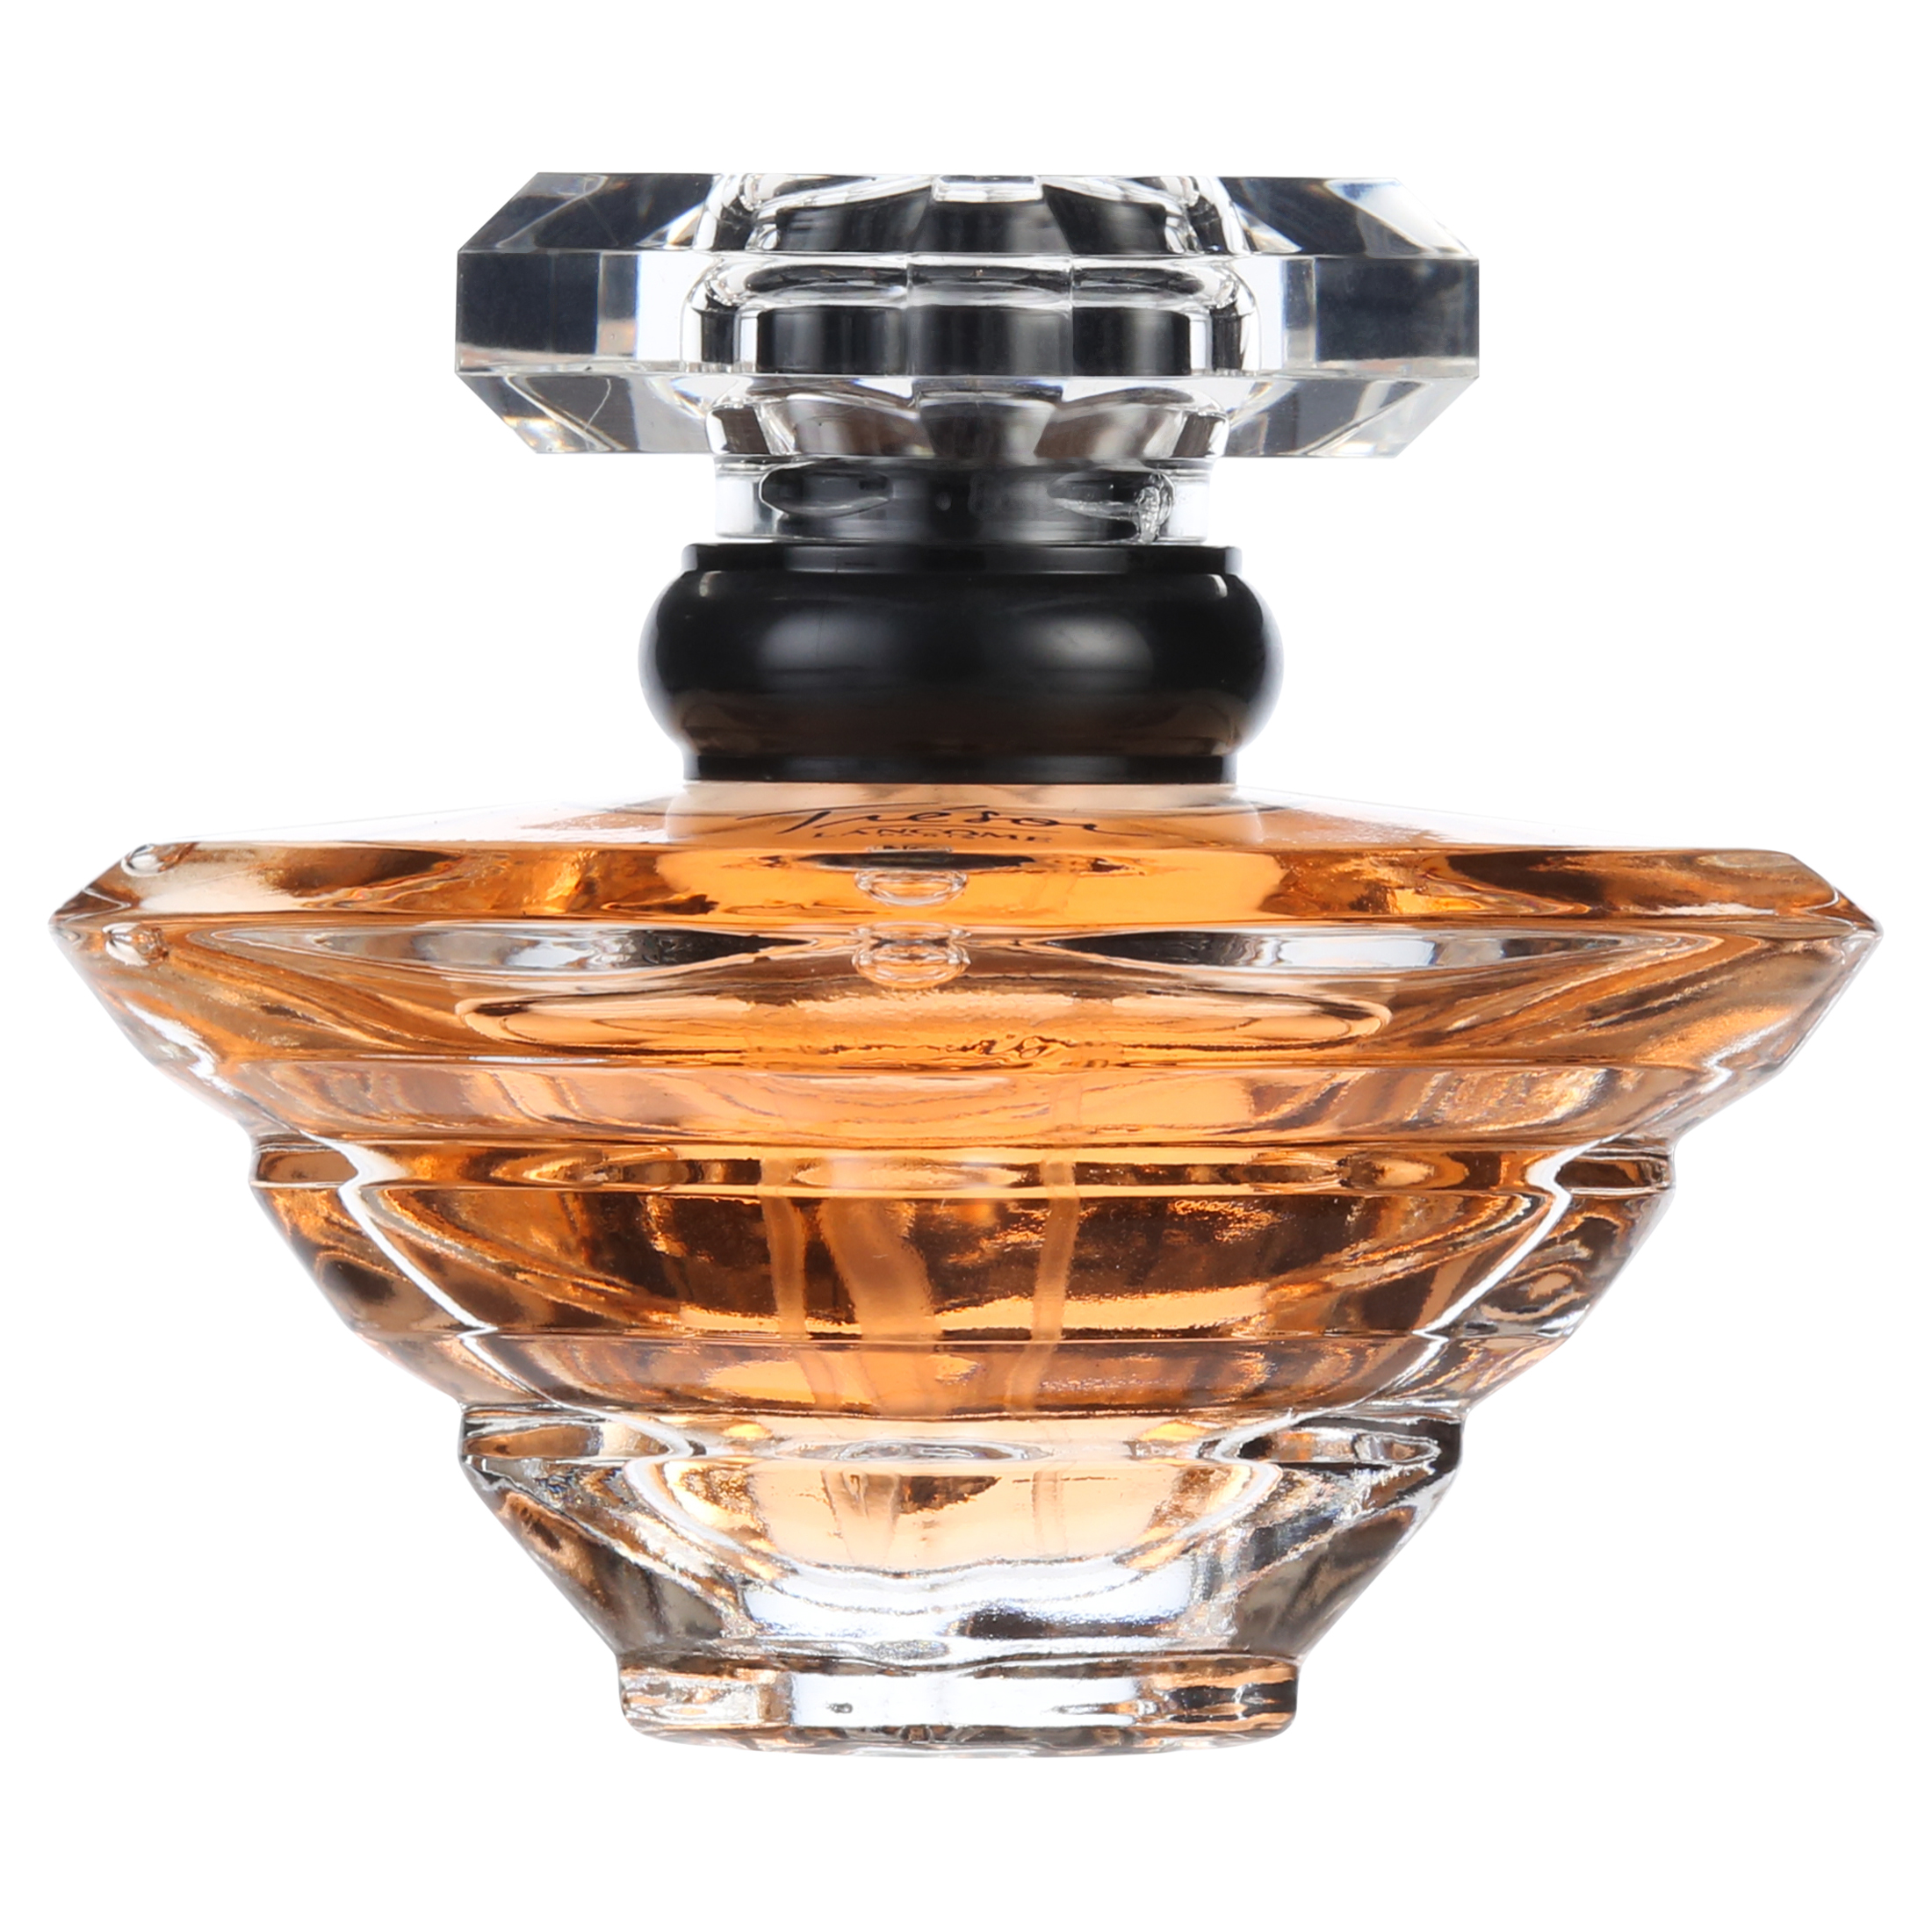 Lancome Tresor Eau De Parfum, Perfume for Women, 1 Oz - image 2 of 5